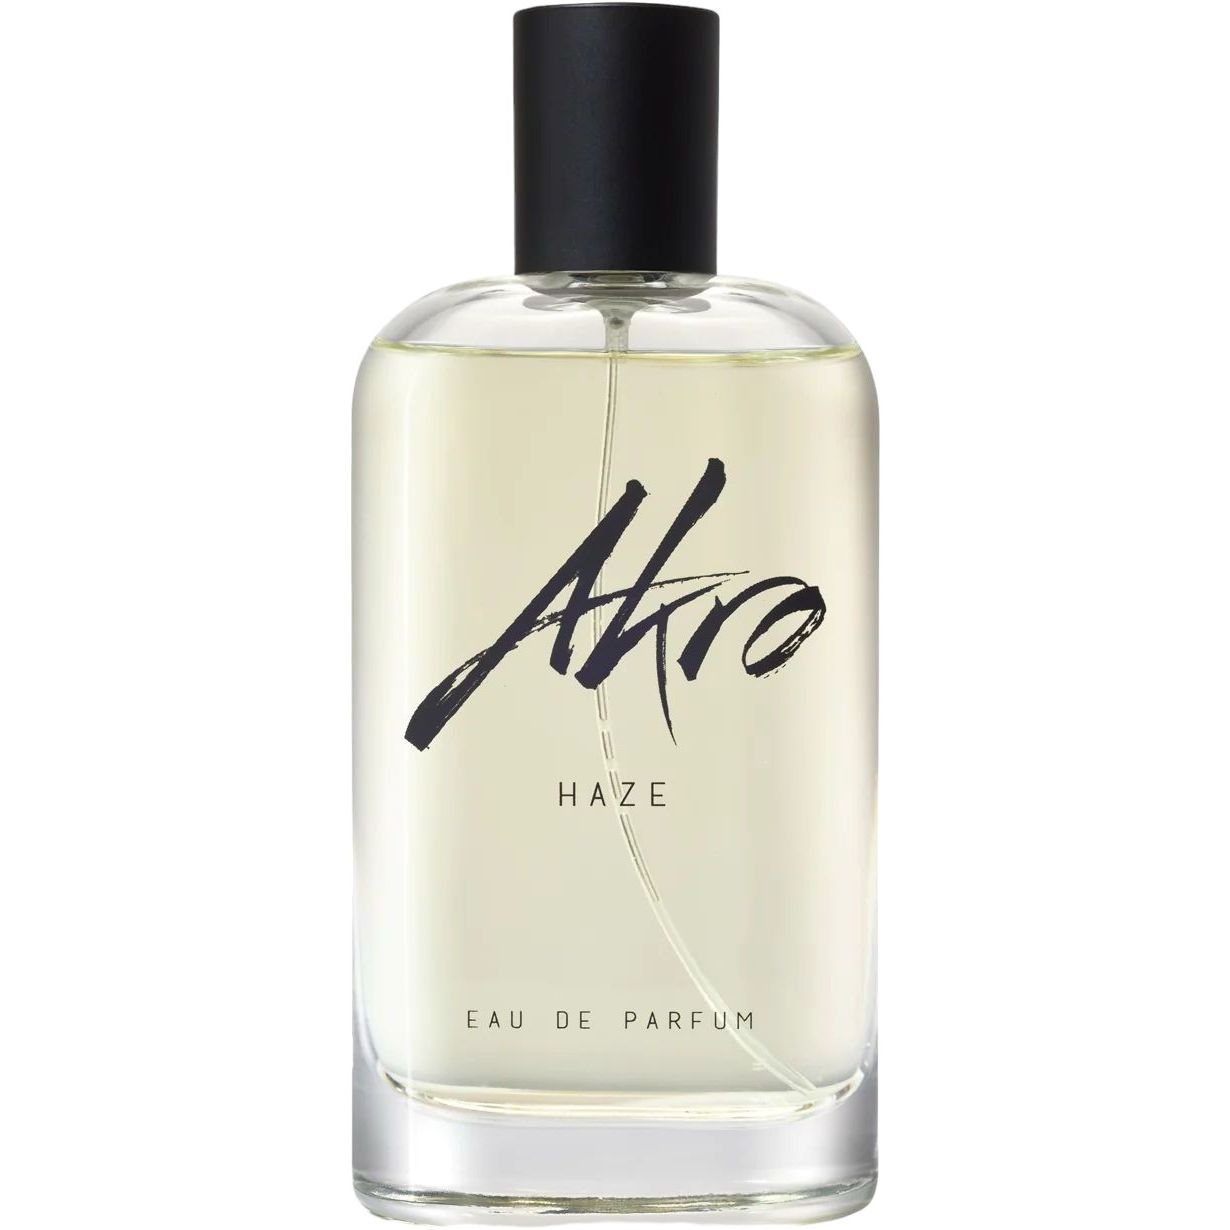 Парфюмерная вода Akro Haze парфюмированная 100 мл - фото 1